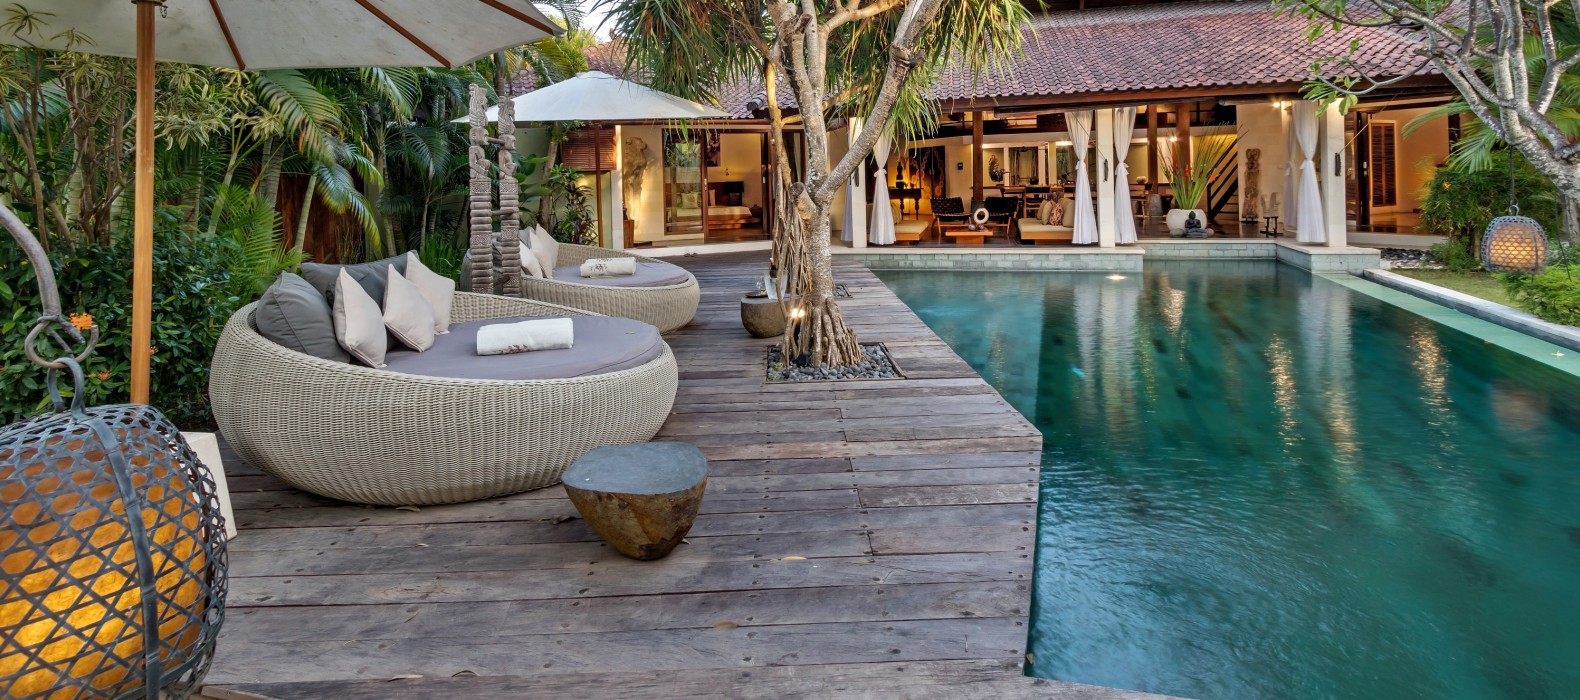 Exterior pool view of Villa Shantika in Bali